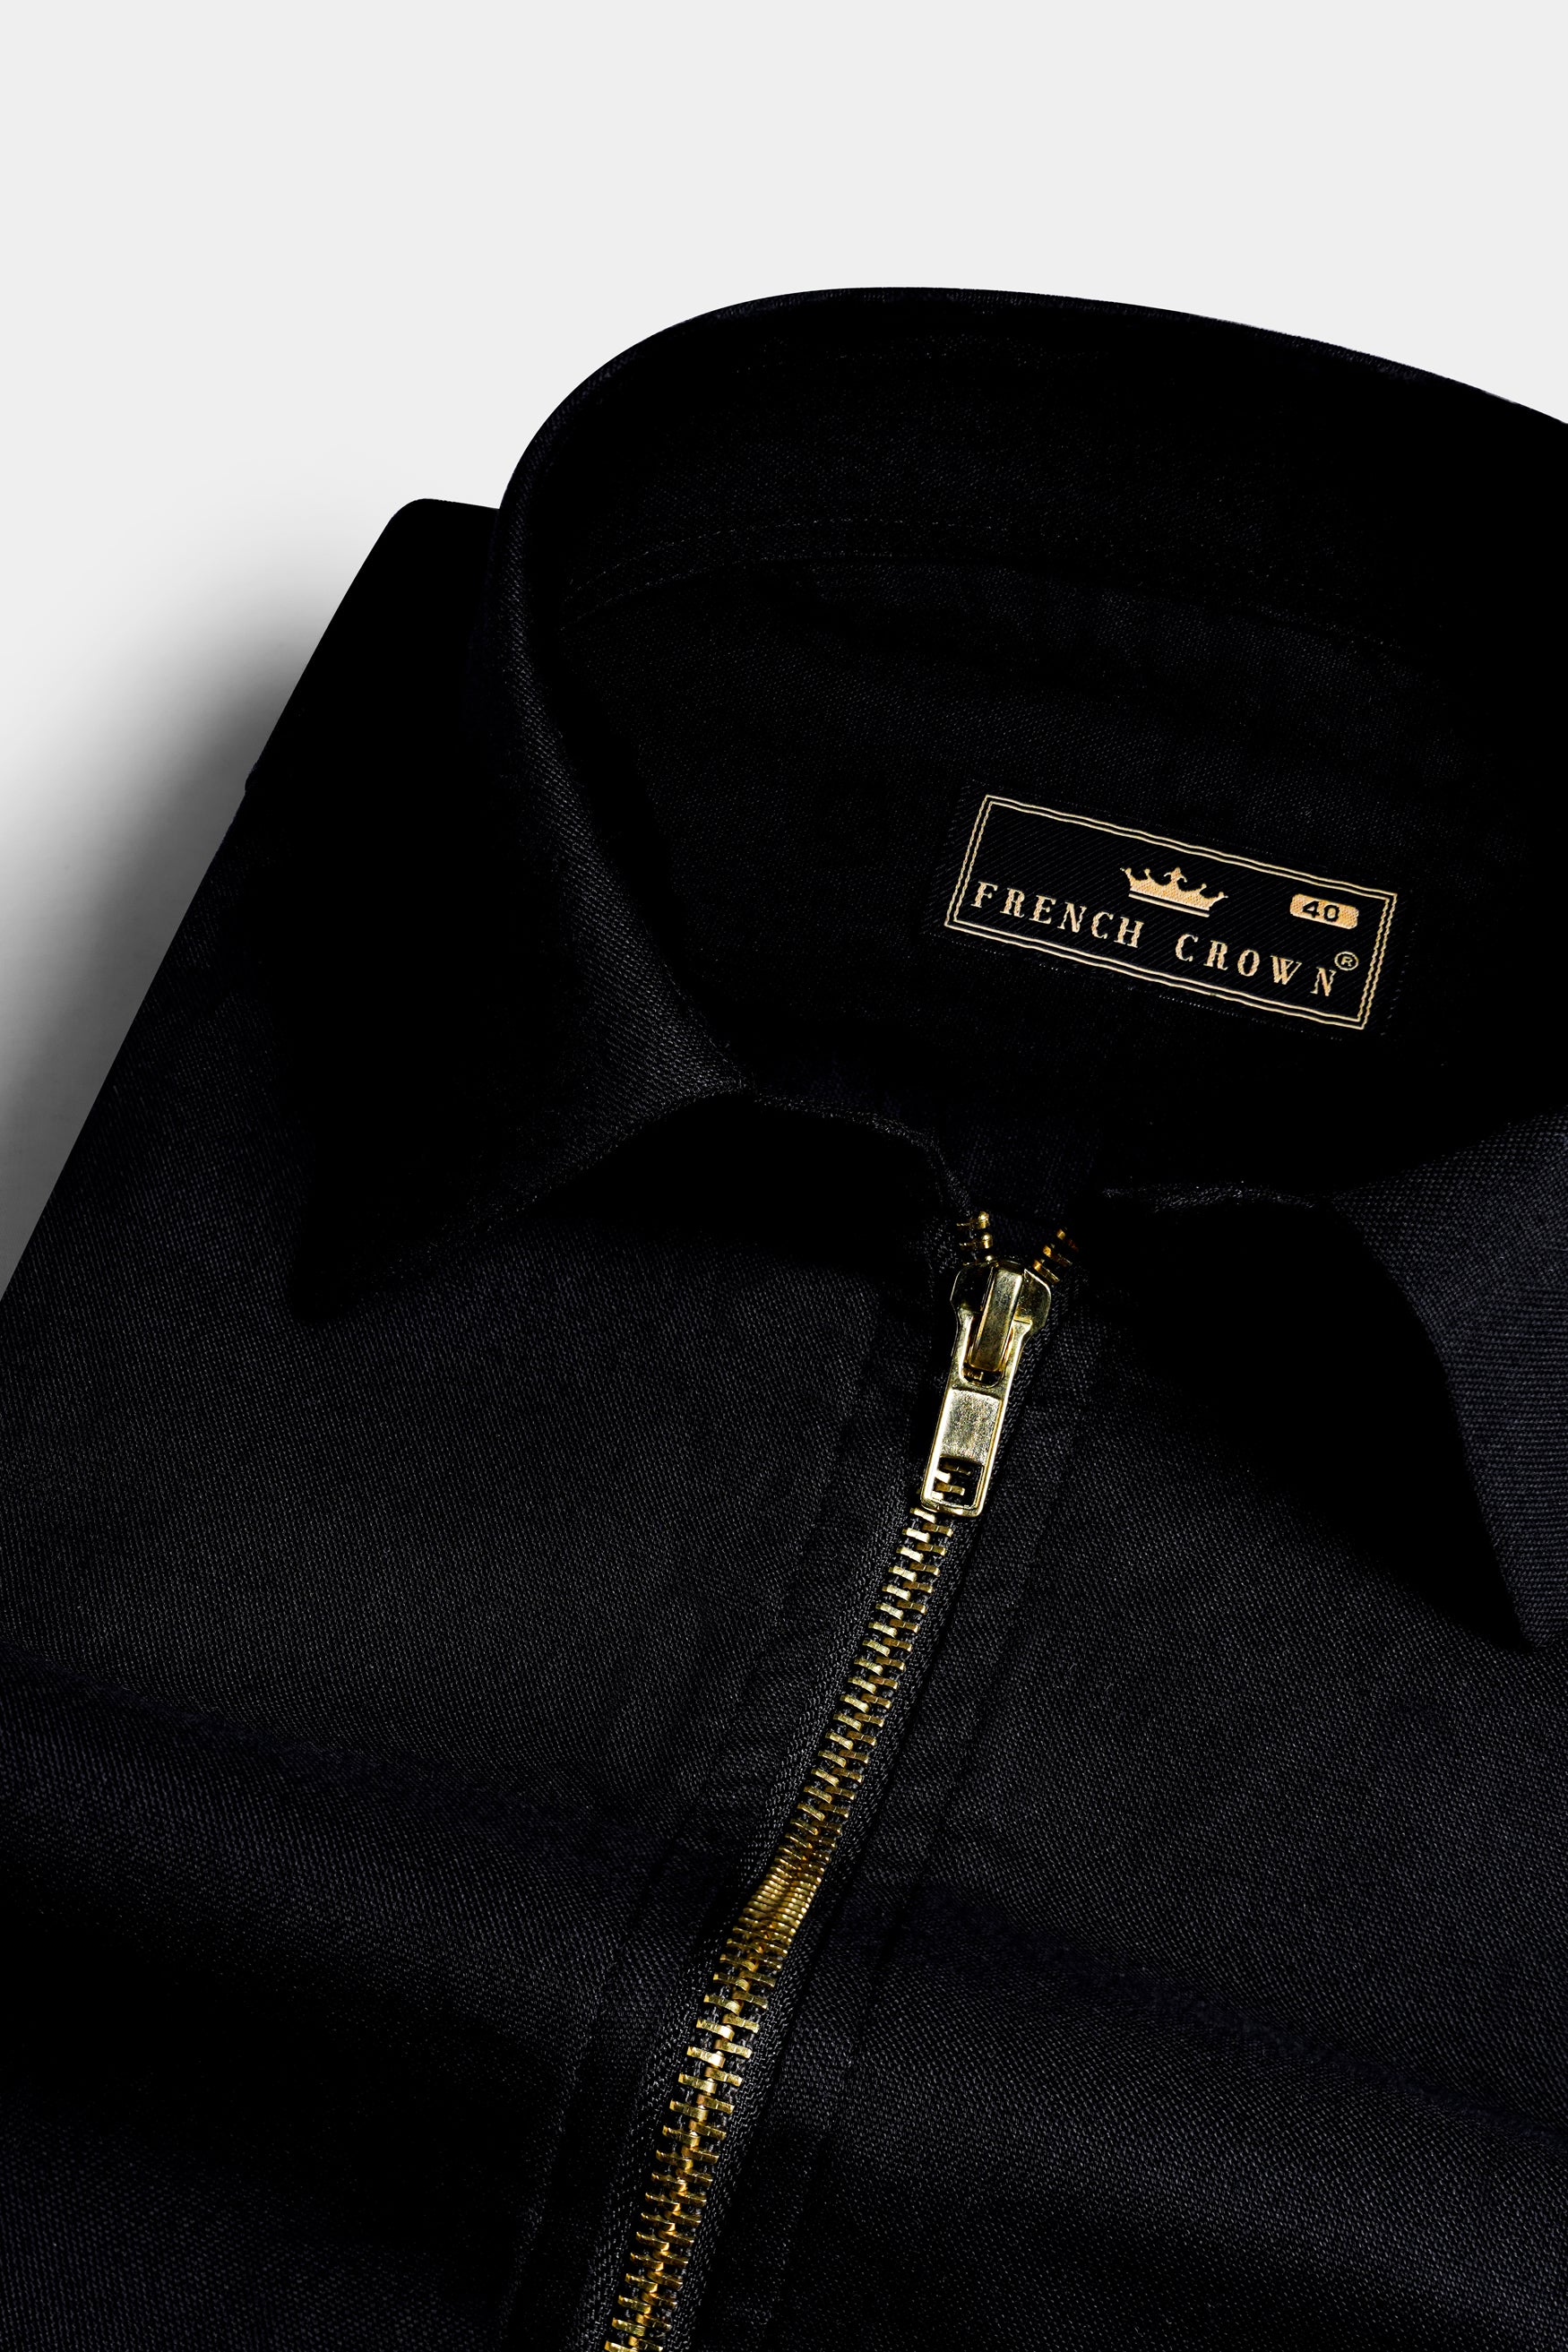 Jade Black Royal Oxford Designer Overshirt with Zipper Closure